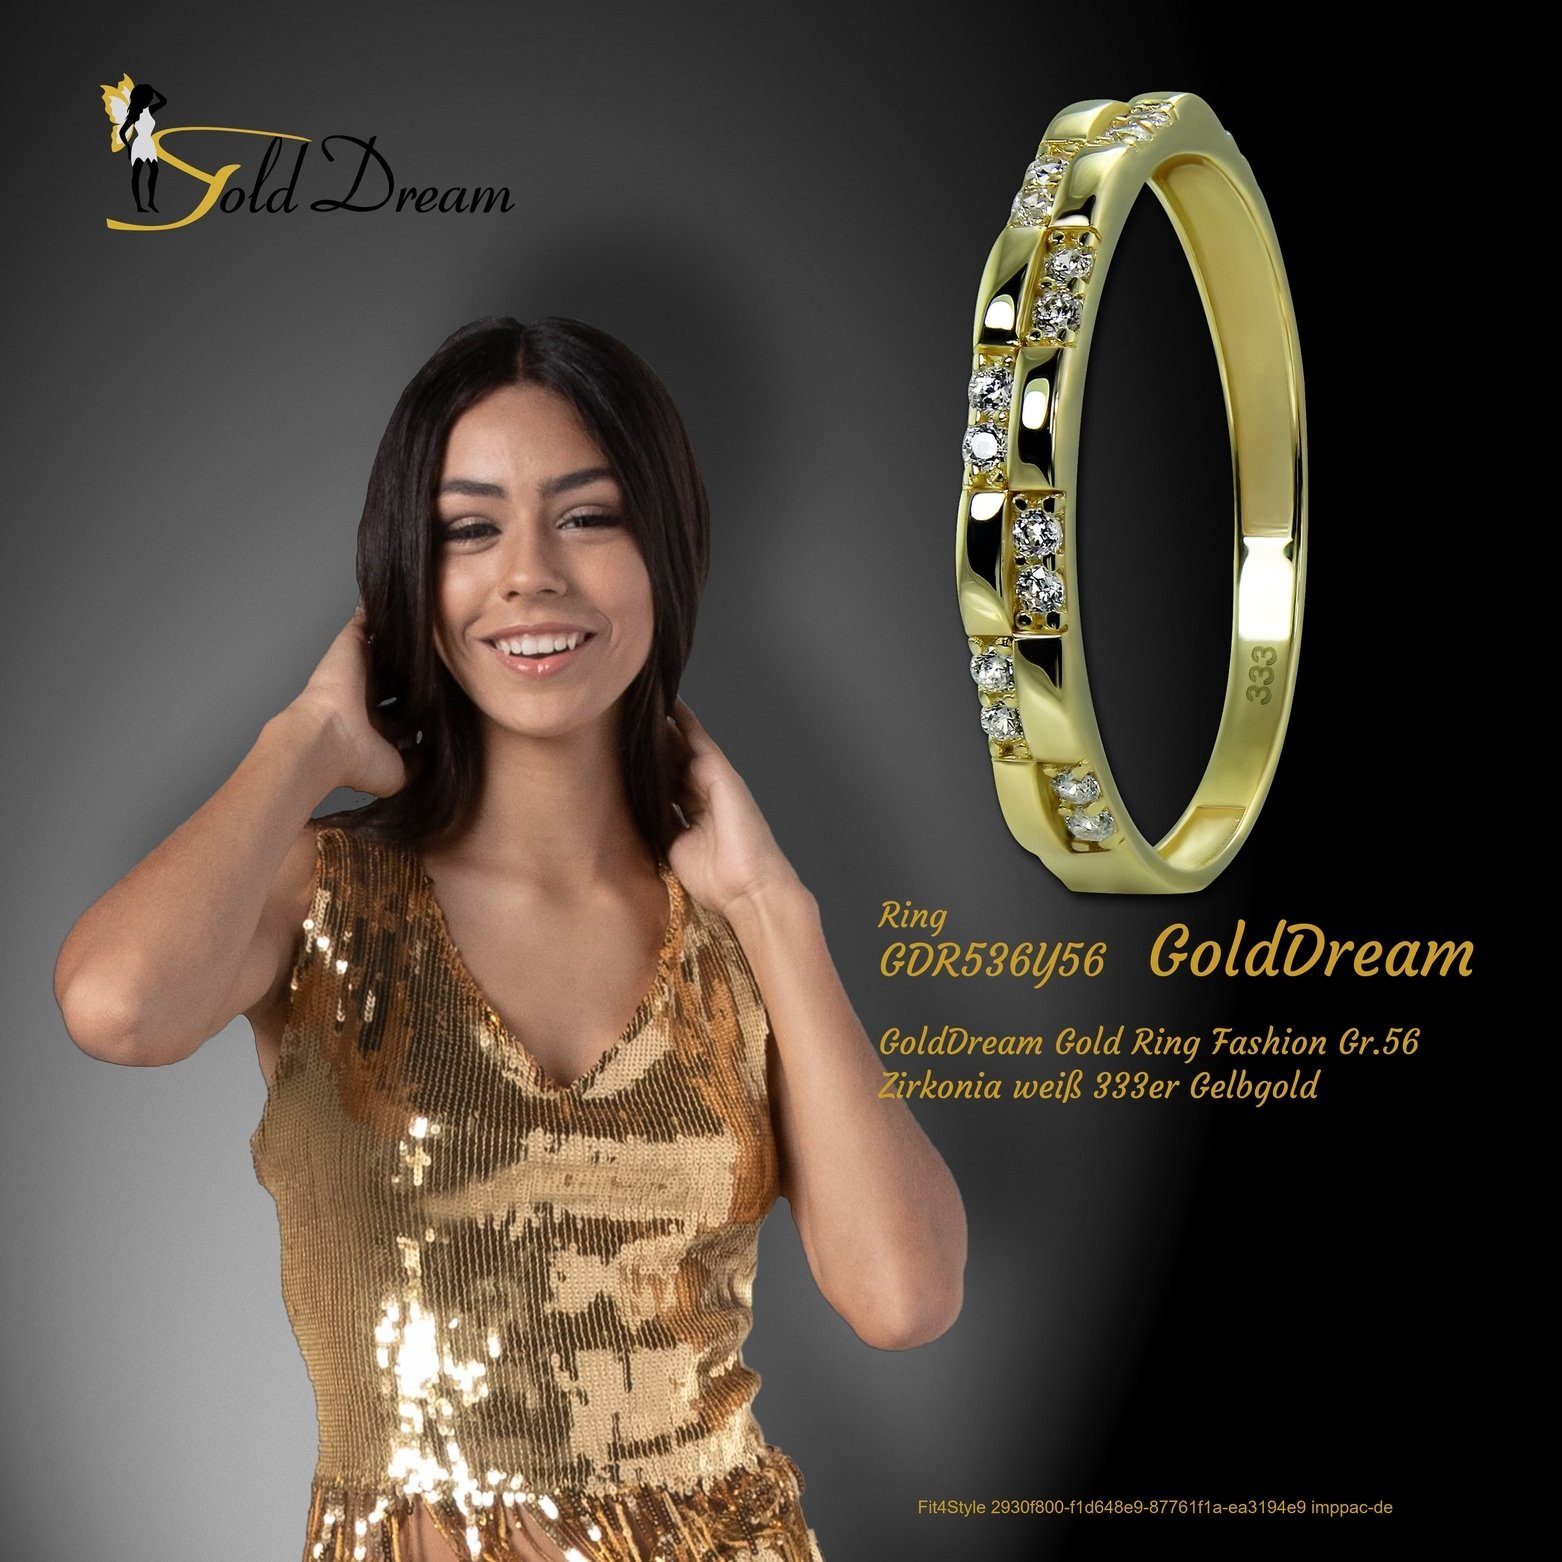 weiß Karat, GoldDream (Fingerring), - Gelbgold Gr.56 Farbe: Fashion Damen Ring 8 gold, Goldring Gold Fashion Ring 333 GoldDream